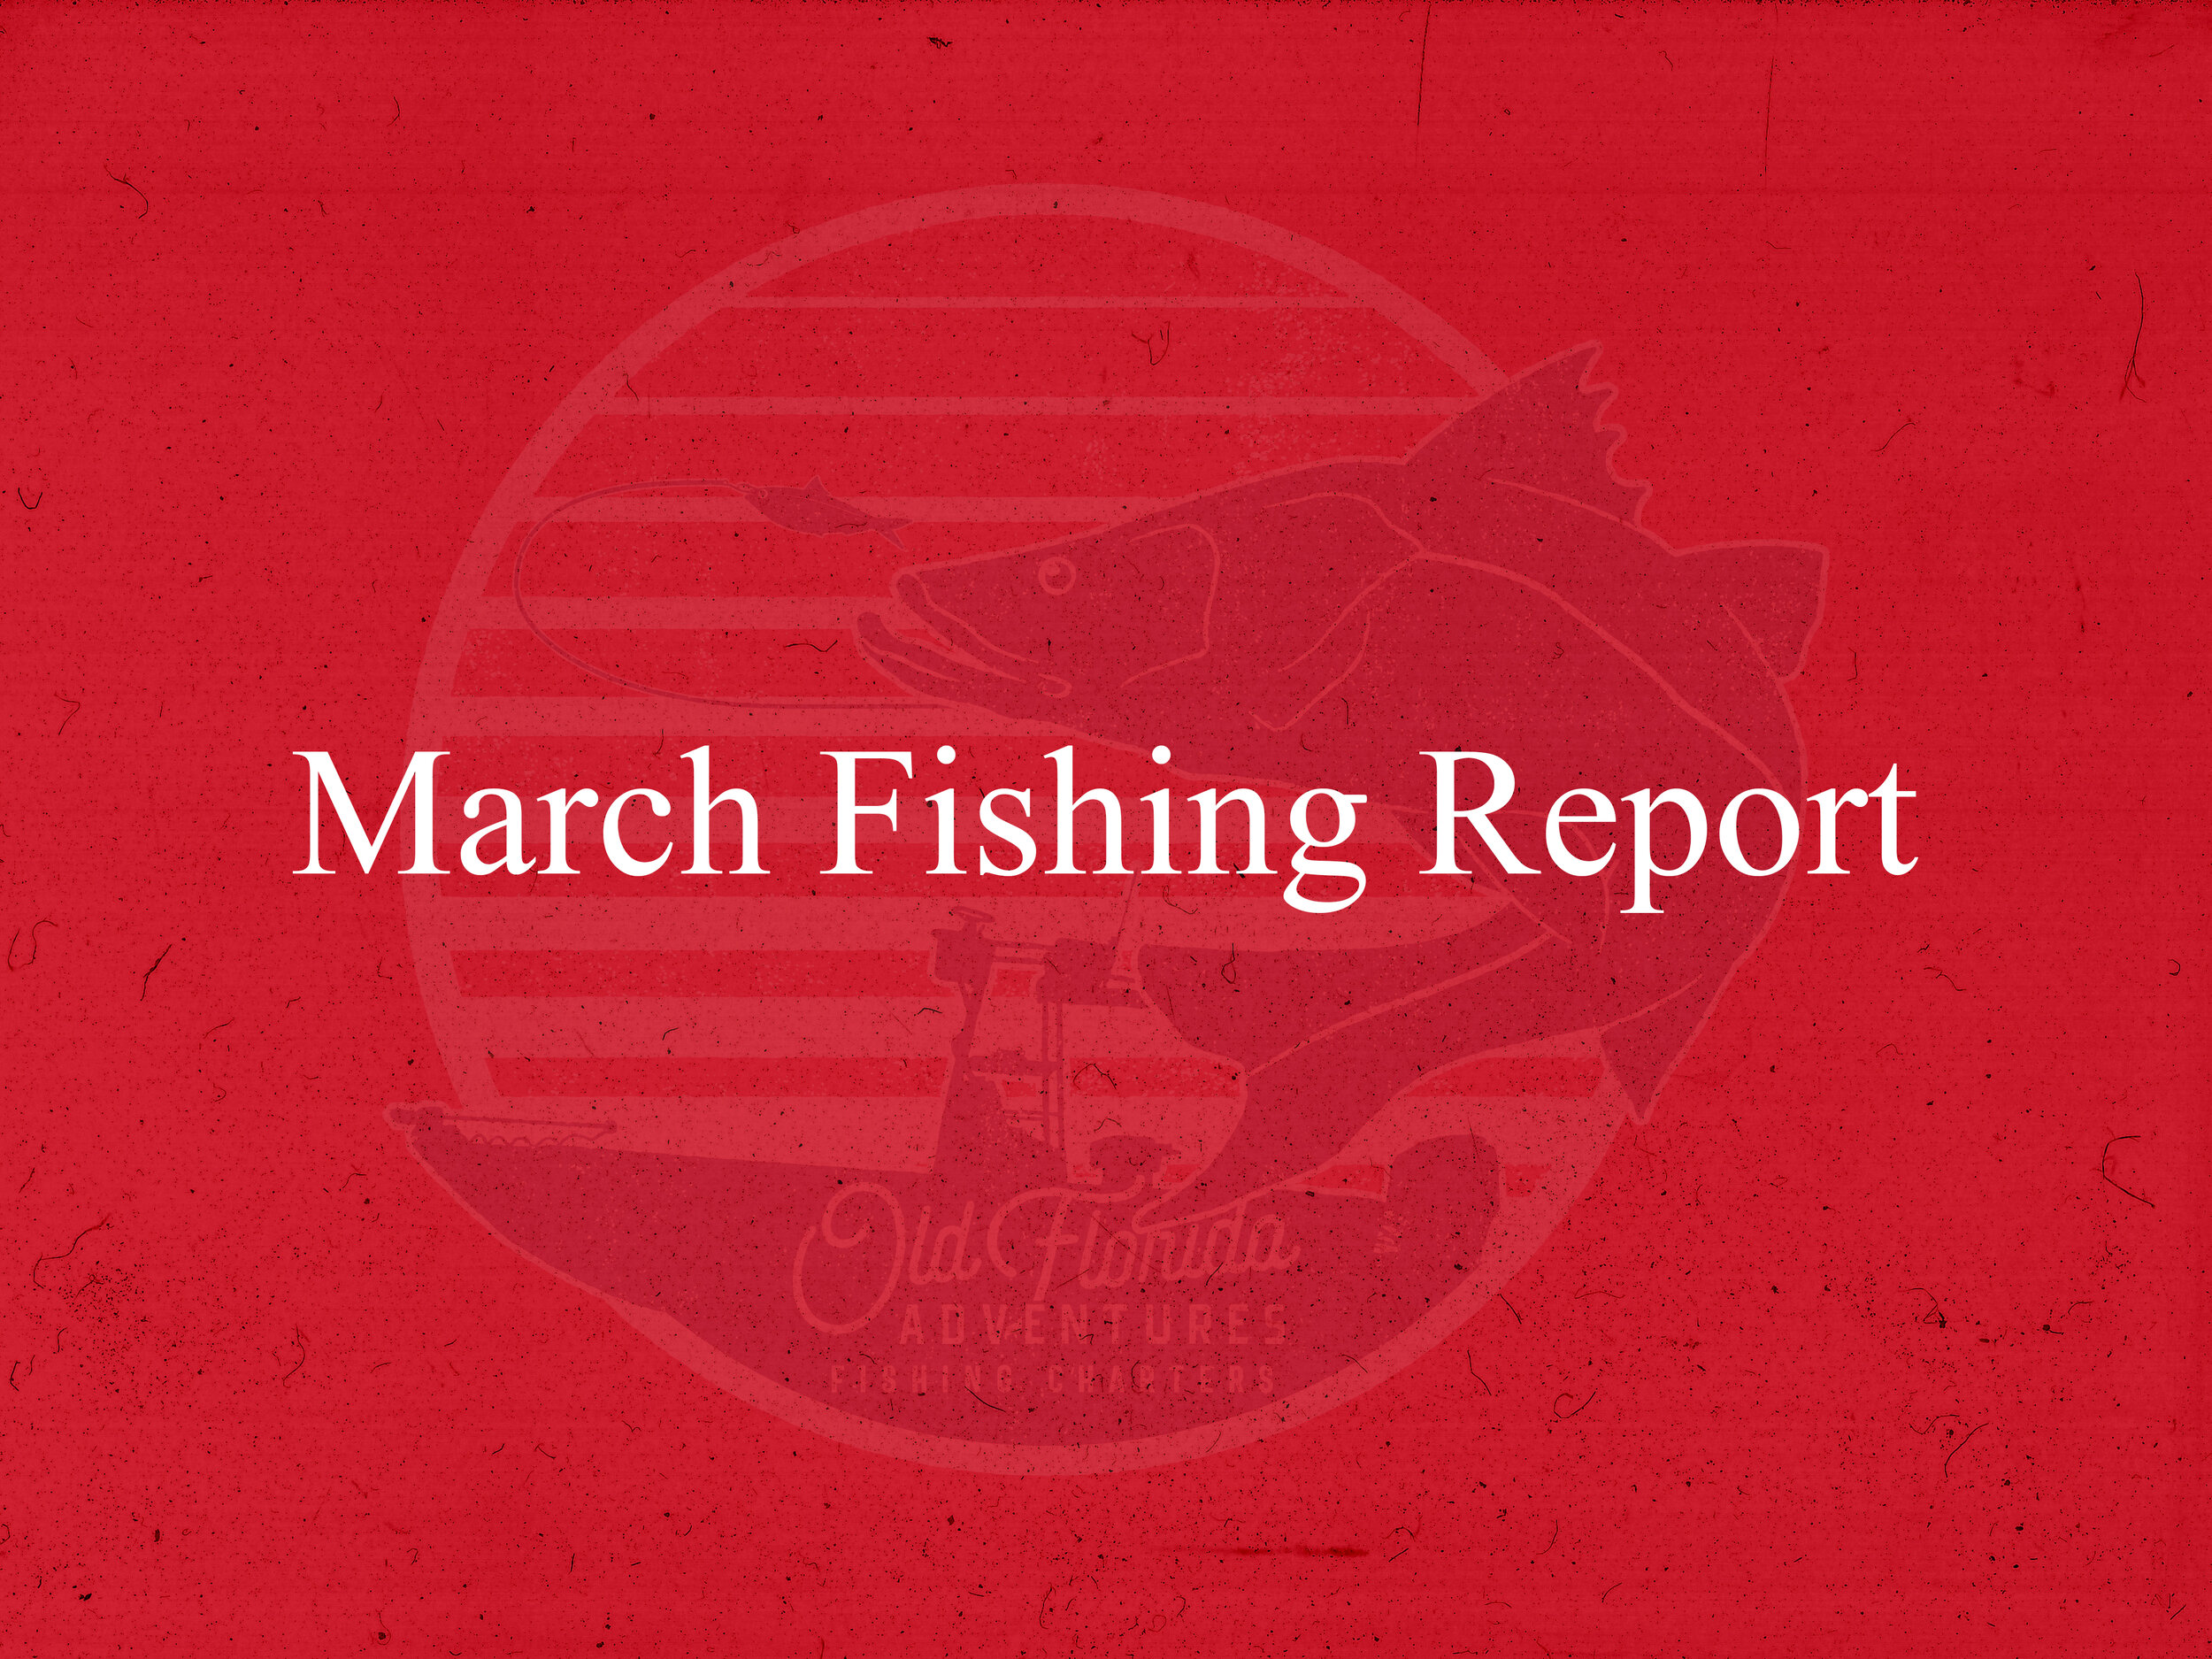 March Fishing Report.jpg